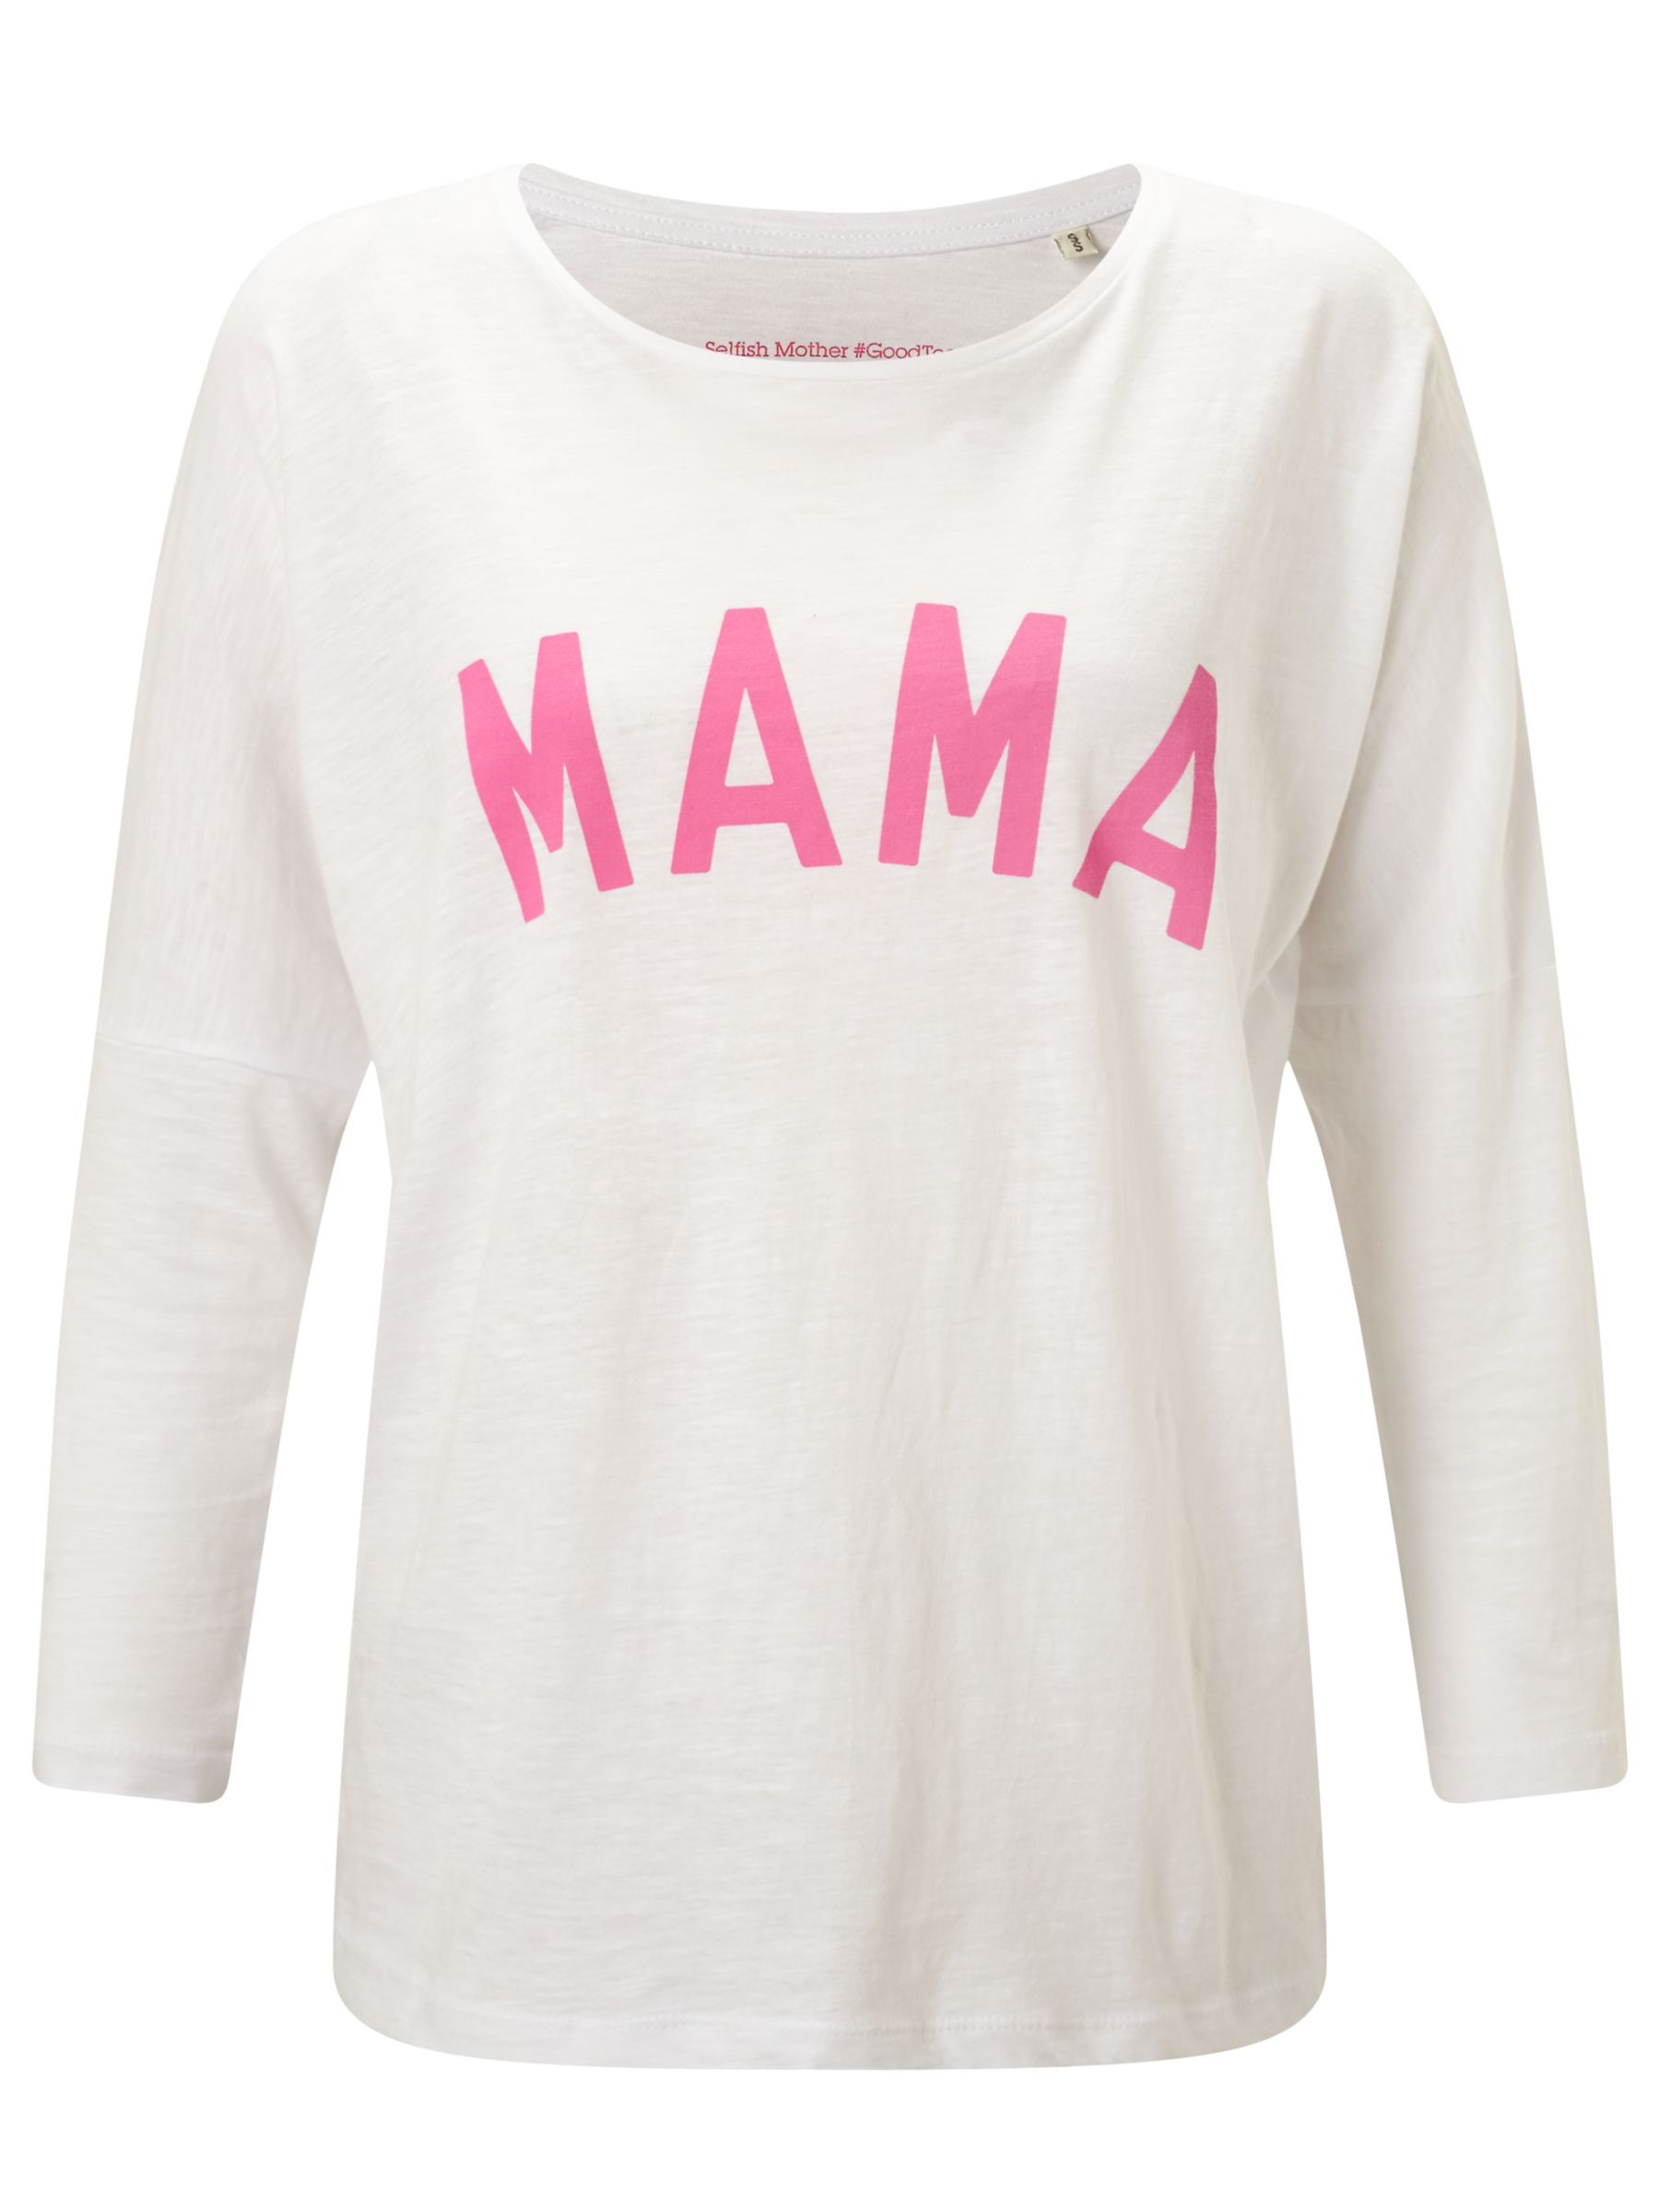 Selfish Mother Mama 3 4 Length Sleeve T Shirt White Neon Pink At John Lewis Partners